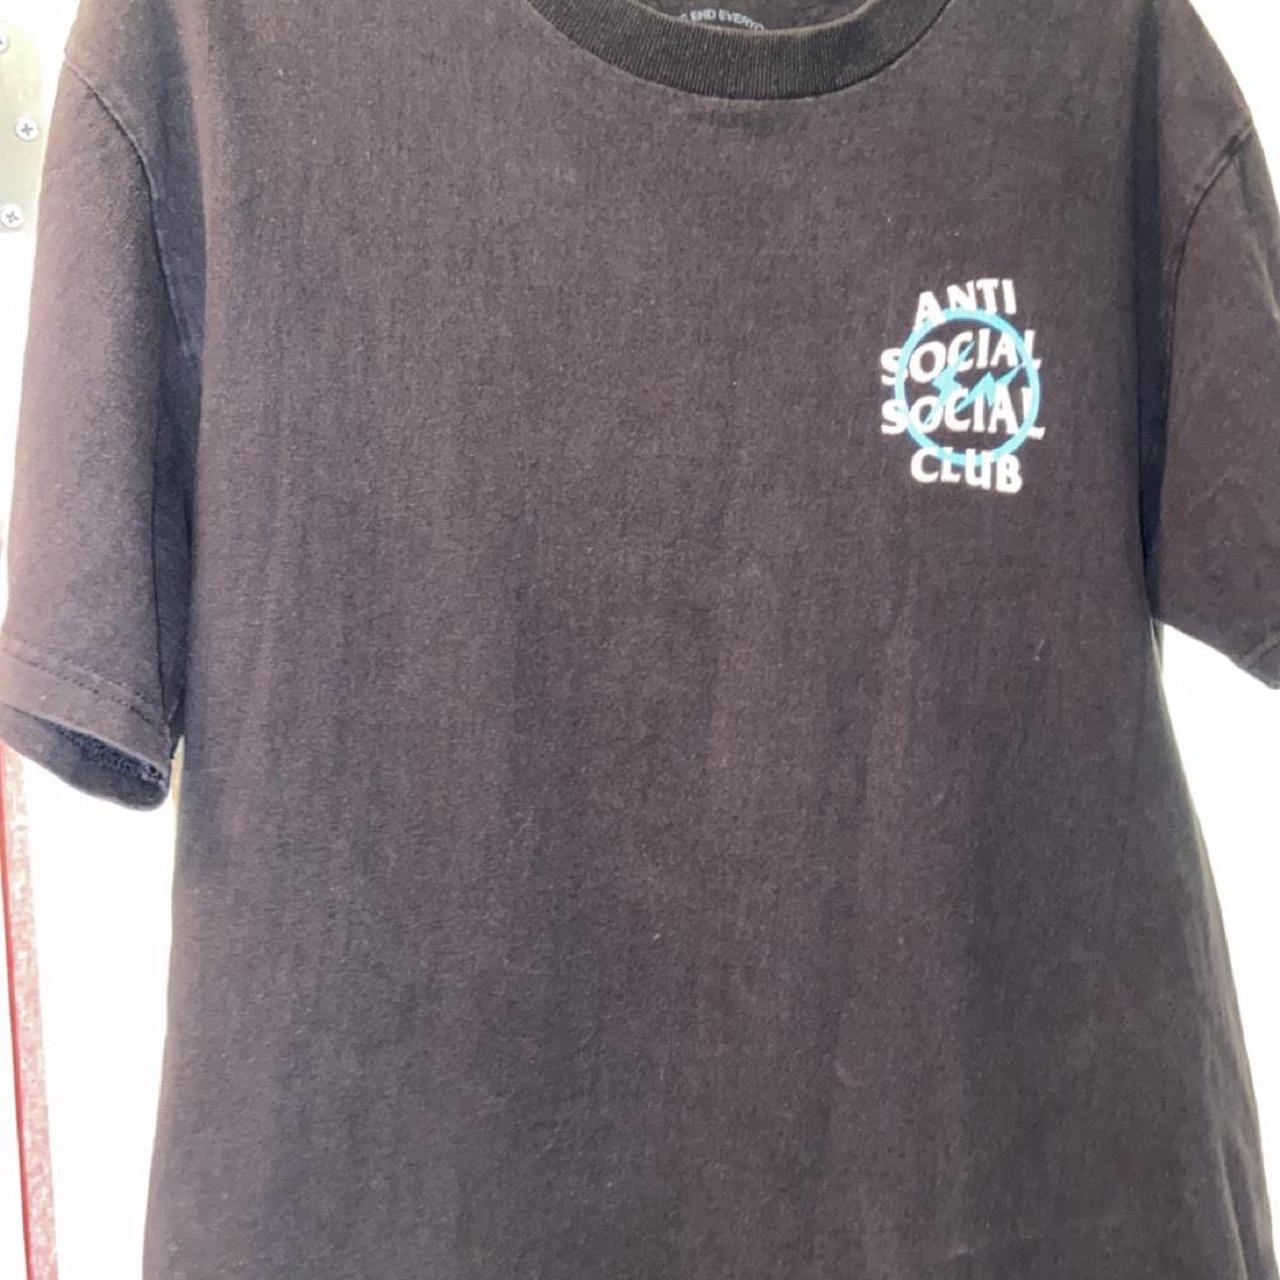 Anti Social Social Club Men's Black and Blue T-shirt (2)